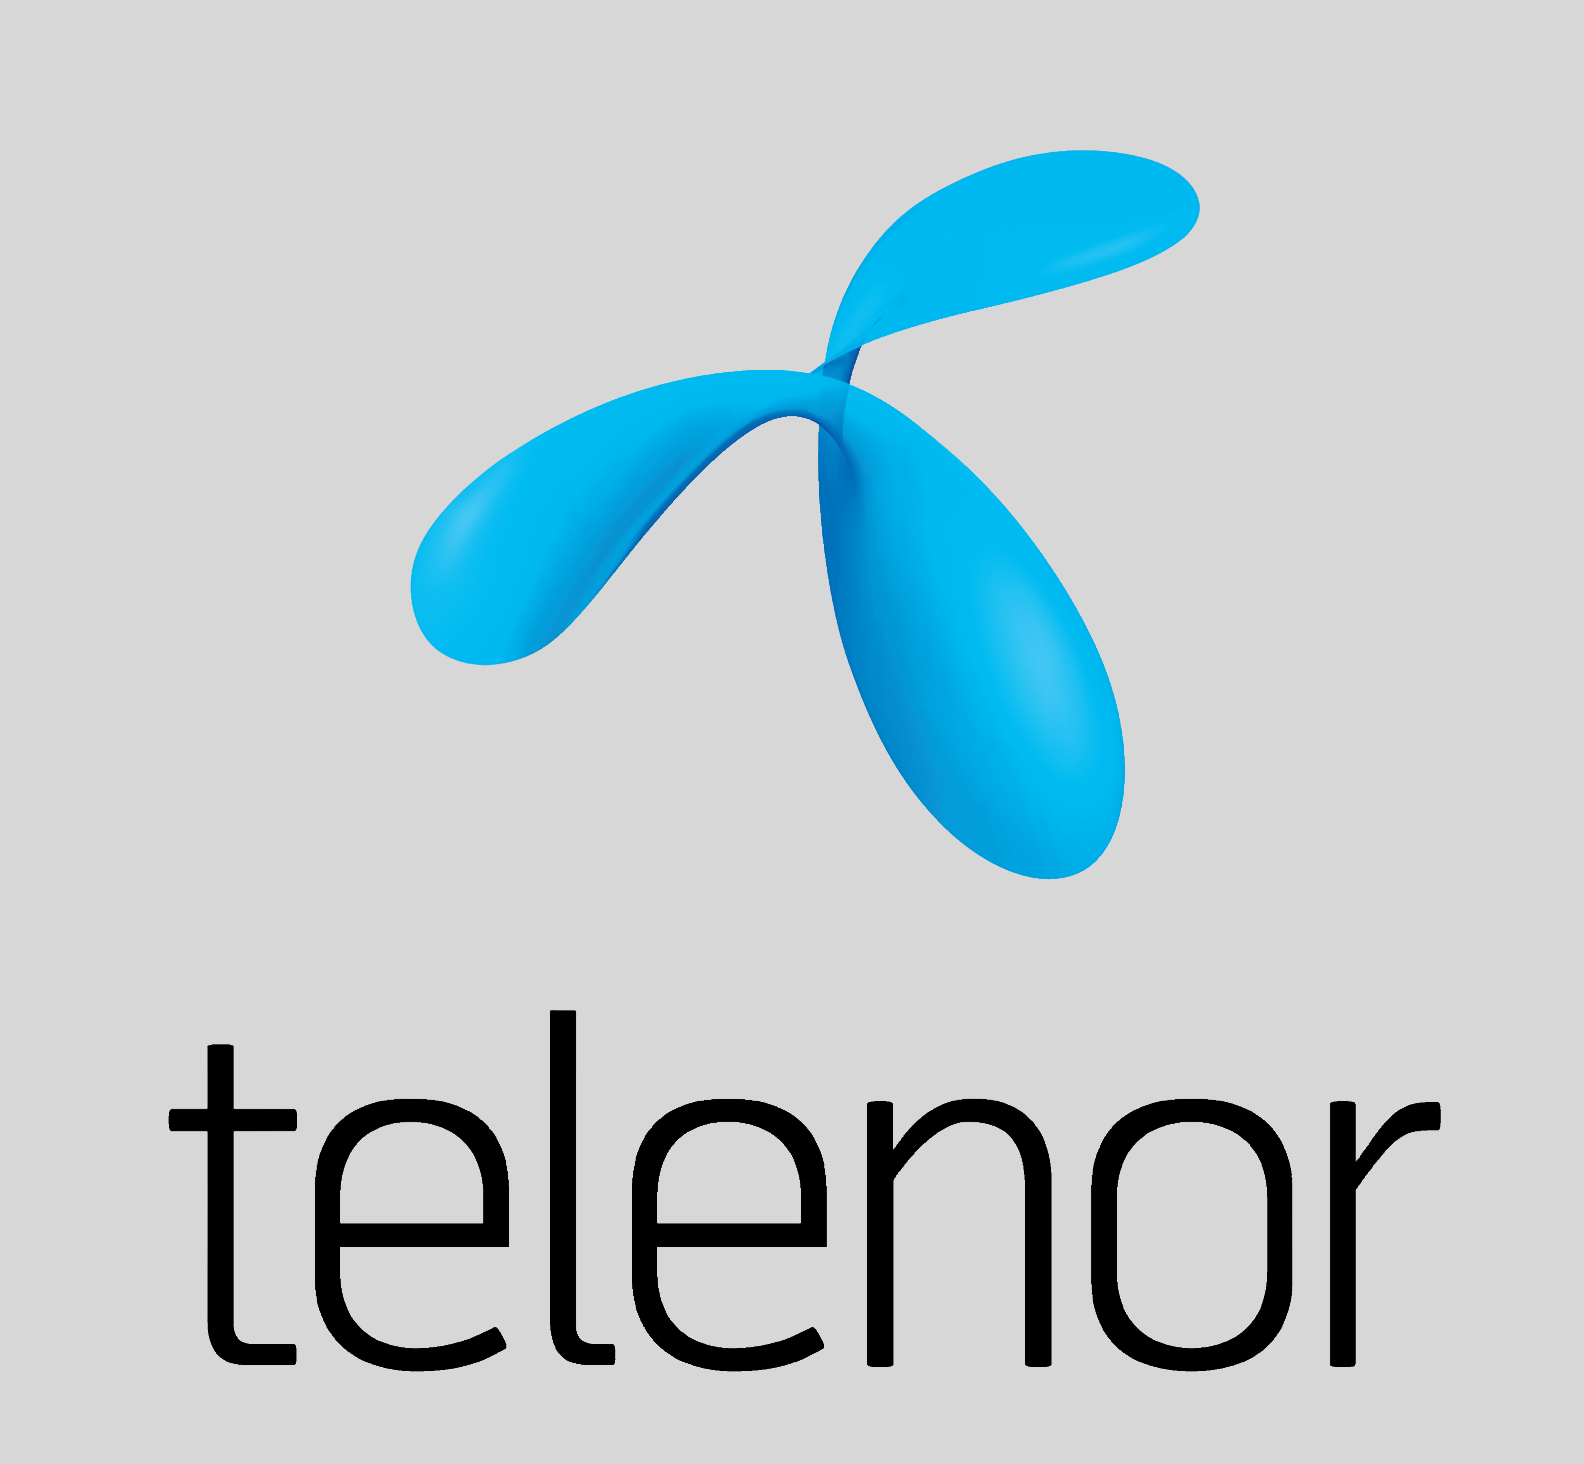 Telenor Norway